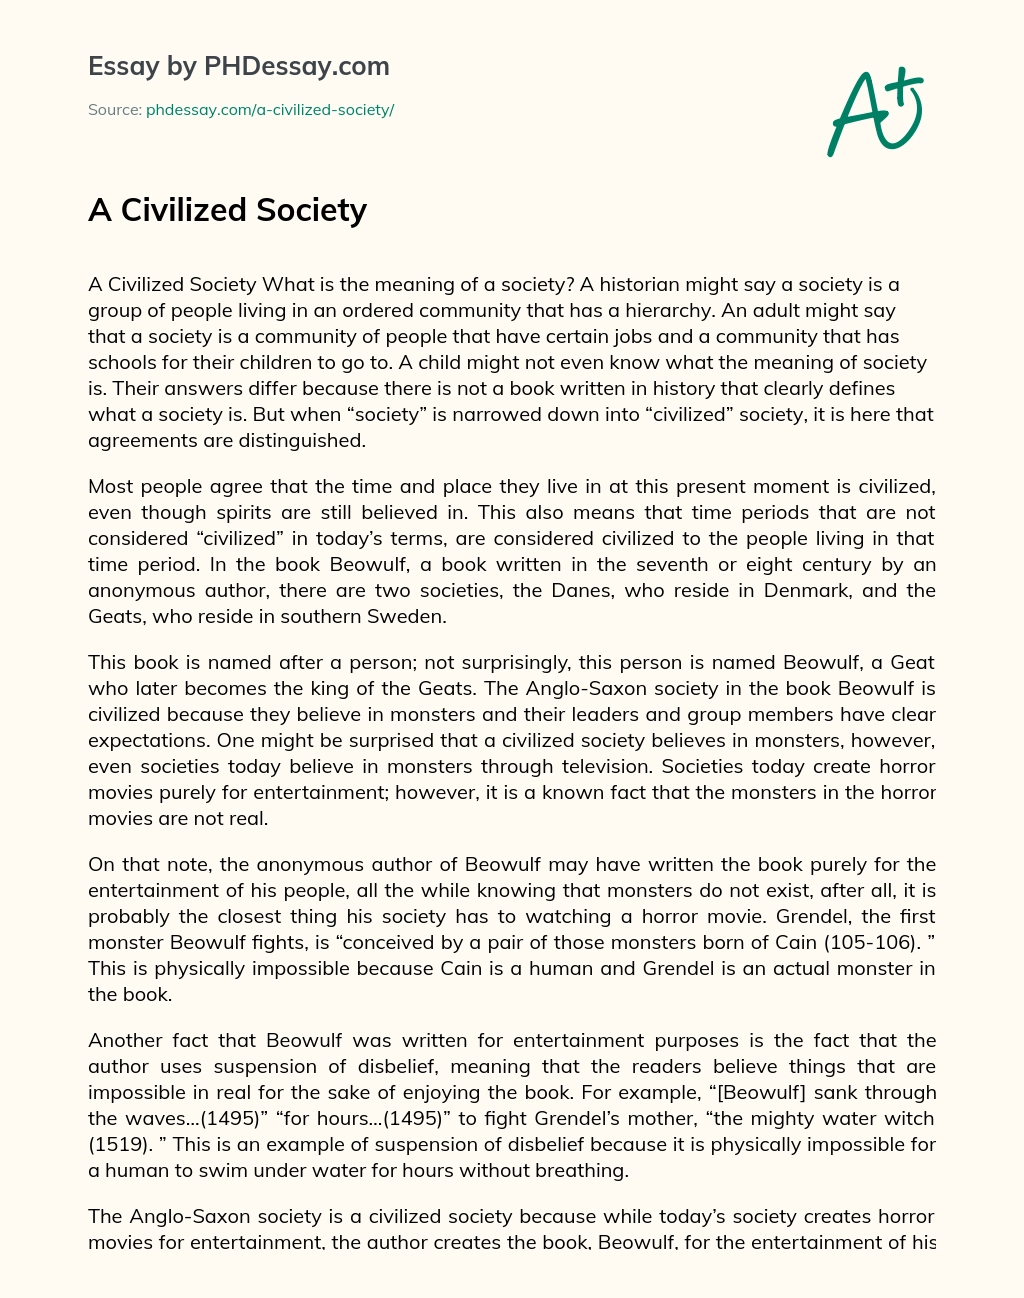 A Civilized Society essay